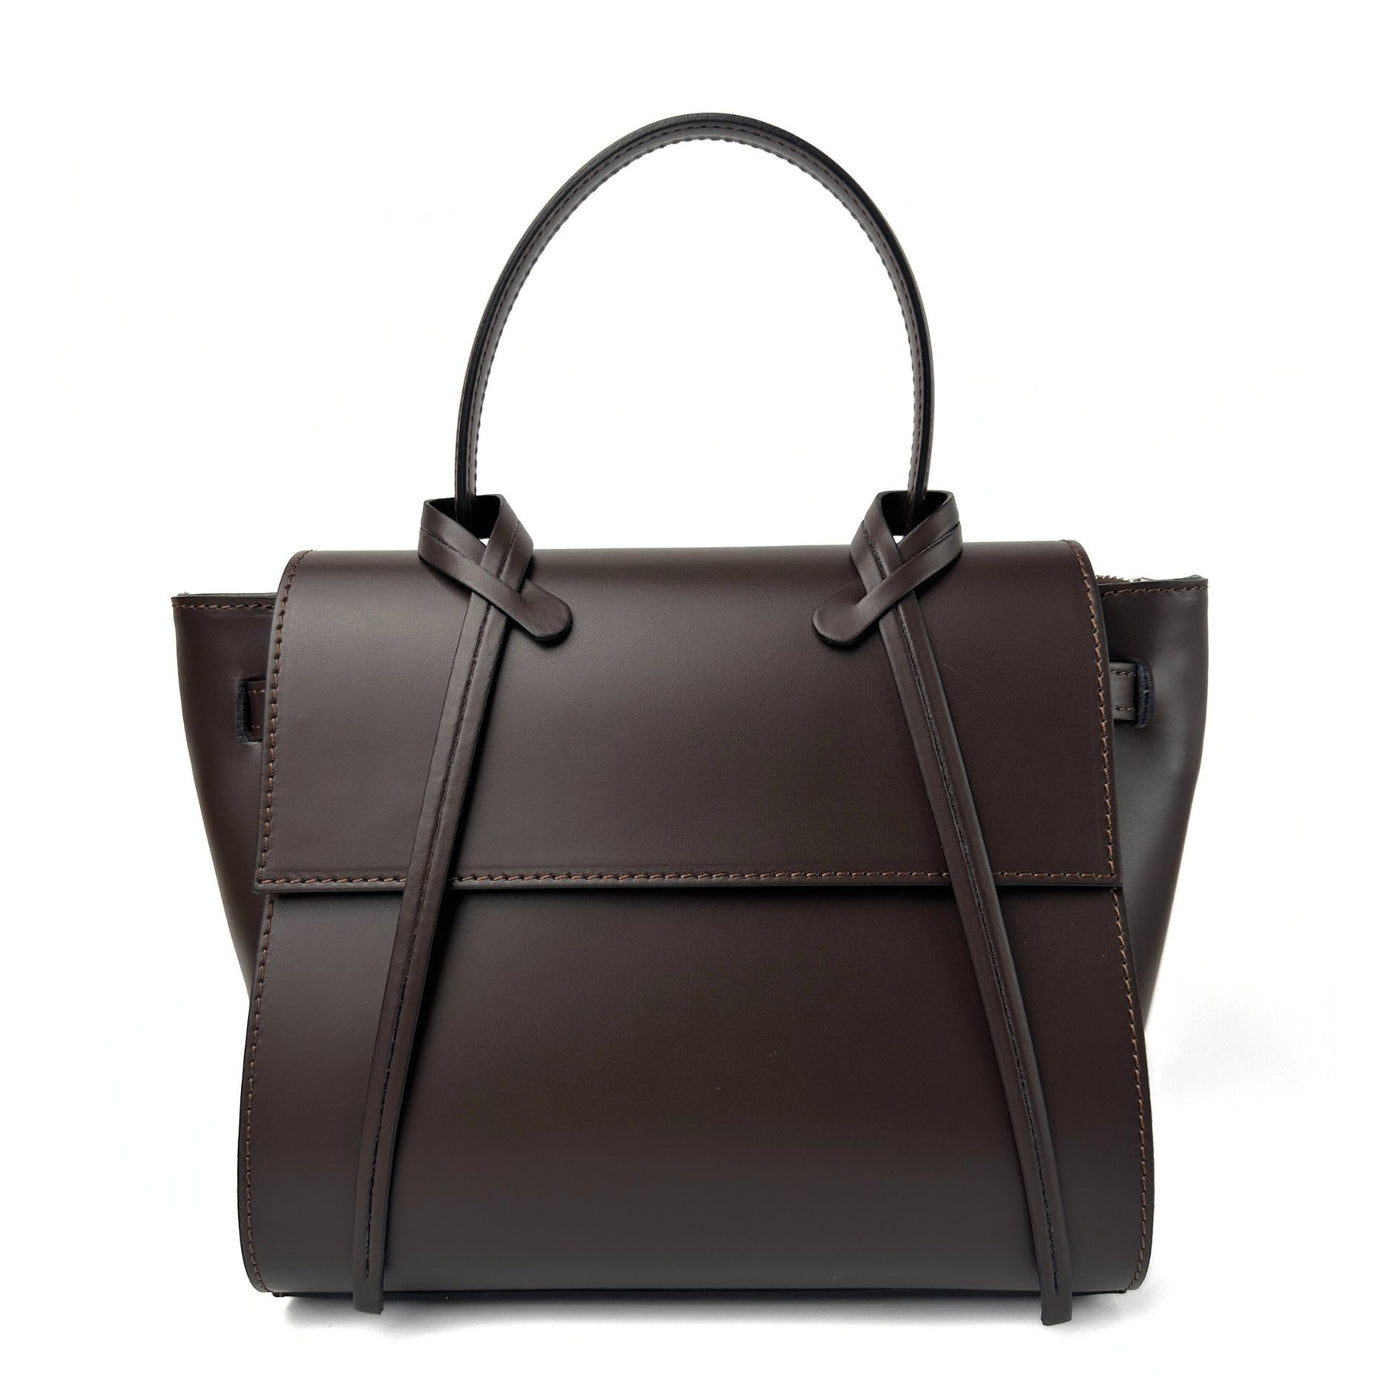 Leather bag "Arezzo", Dark brown